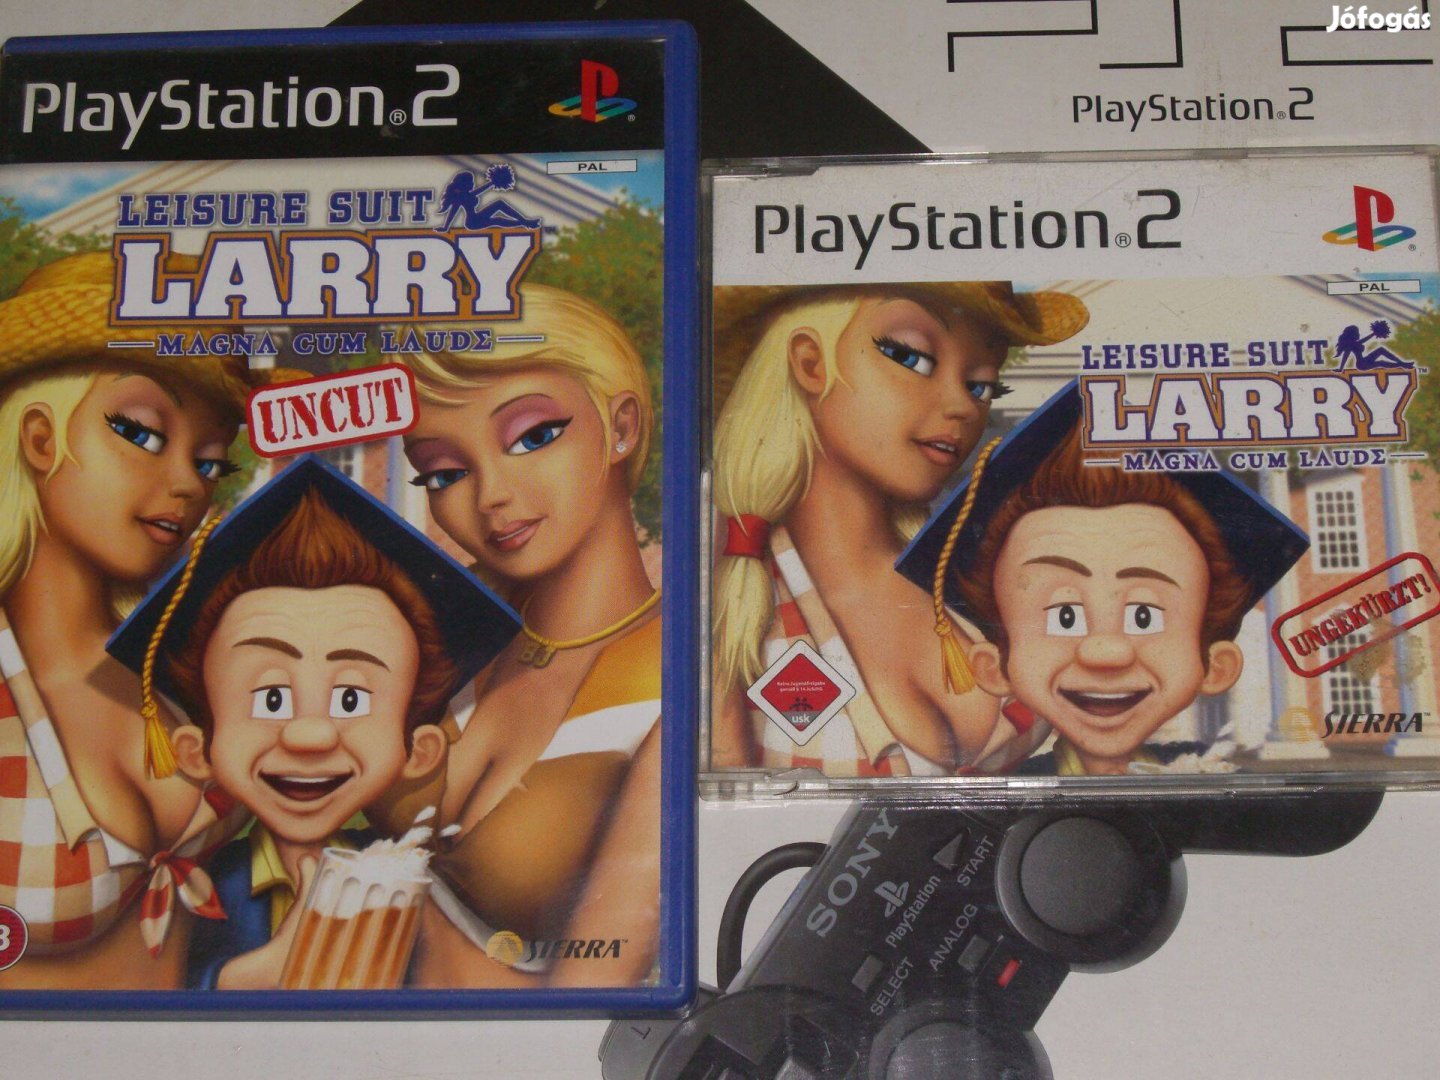 Leisure Suit Larry Playstation 2 eredeti lemez eladó